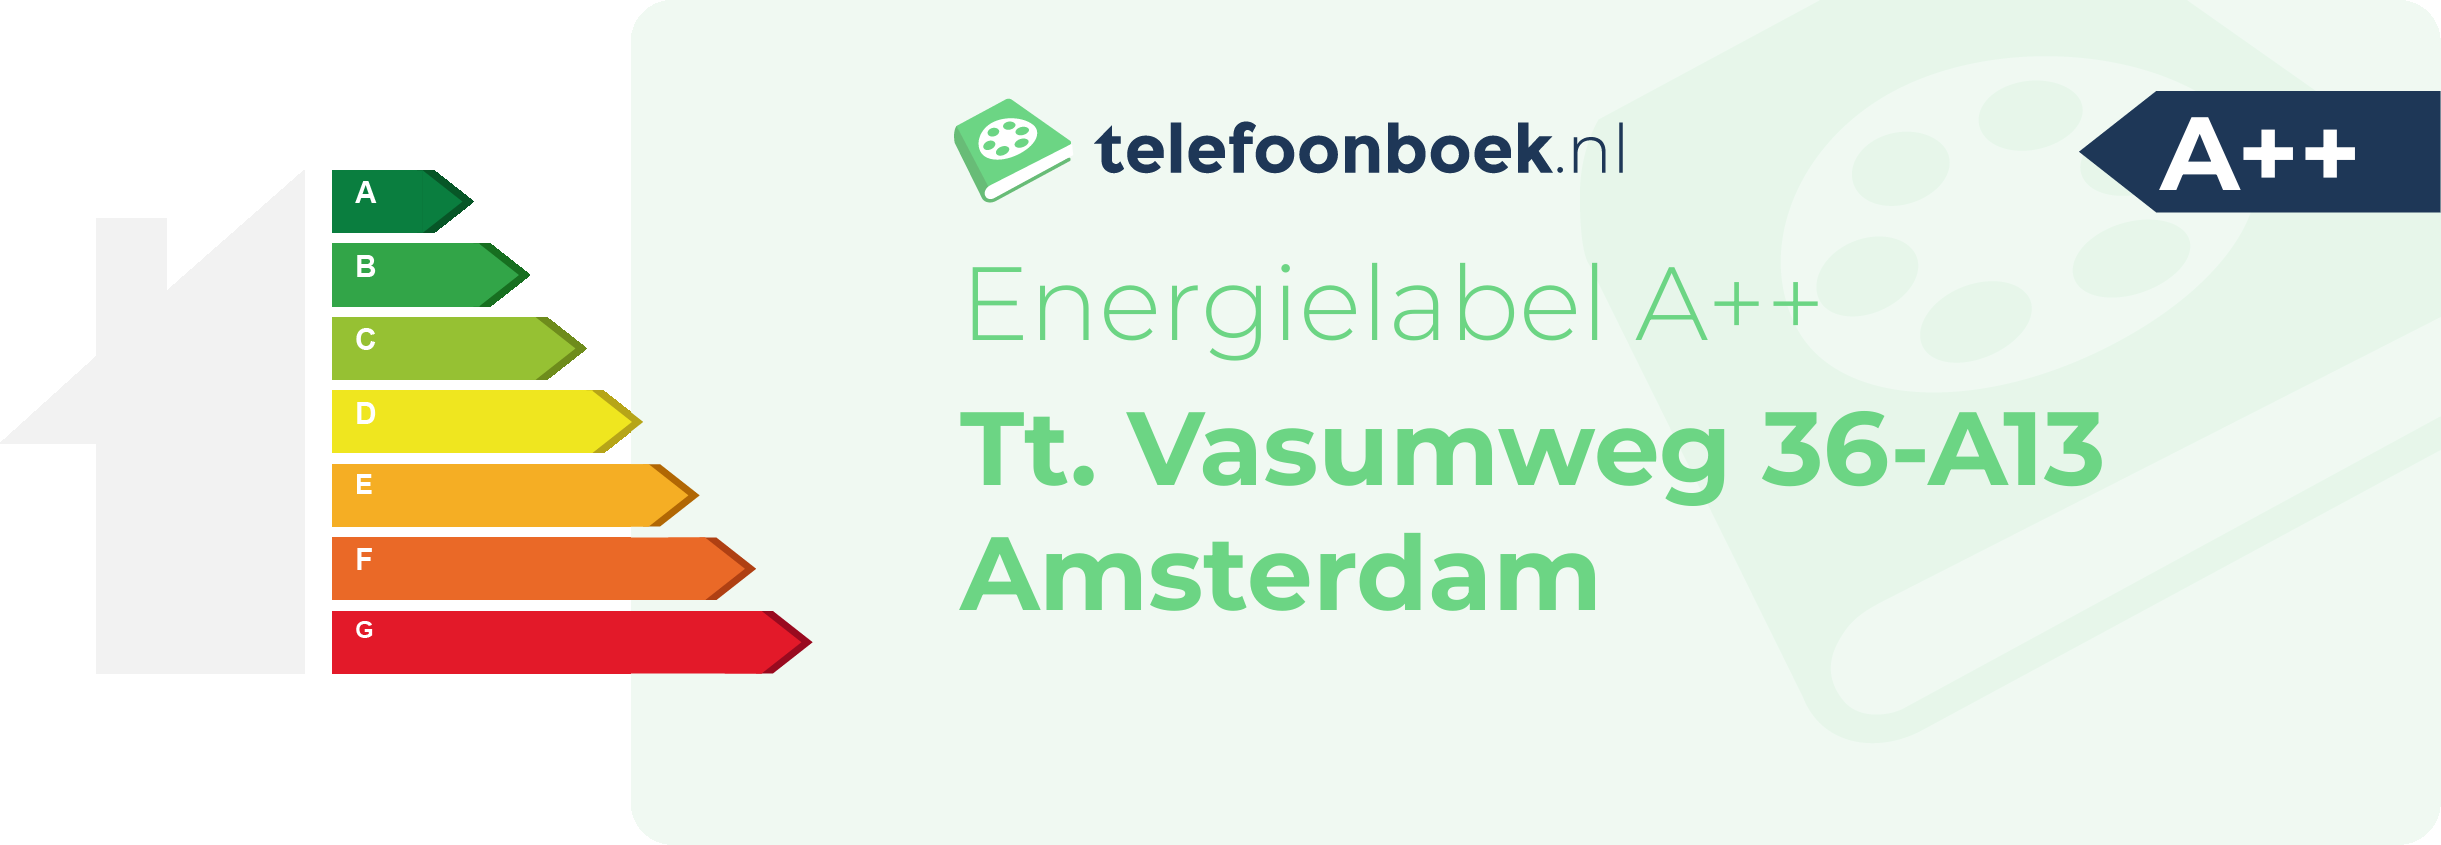 Energielabel Tt. Vasumweg 36-A13 Amsterdam